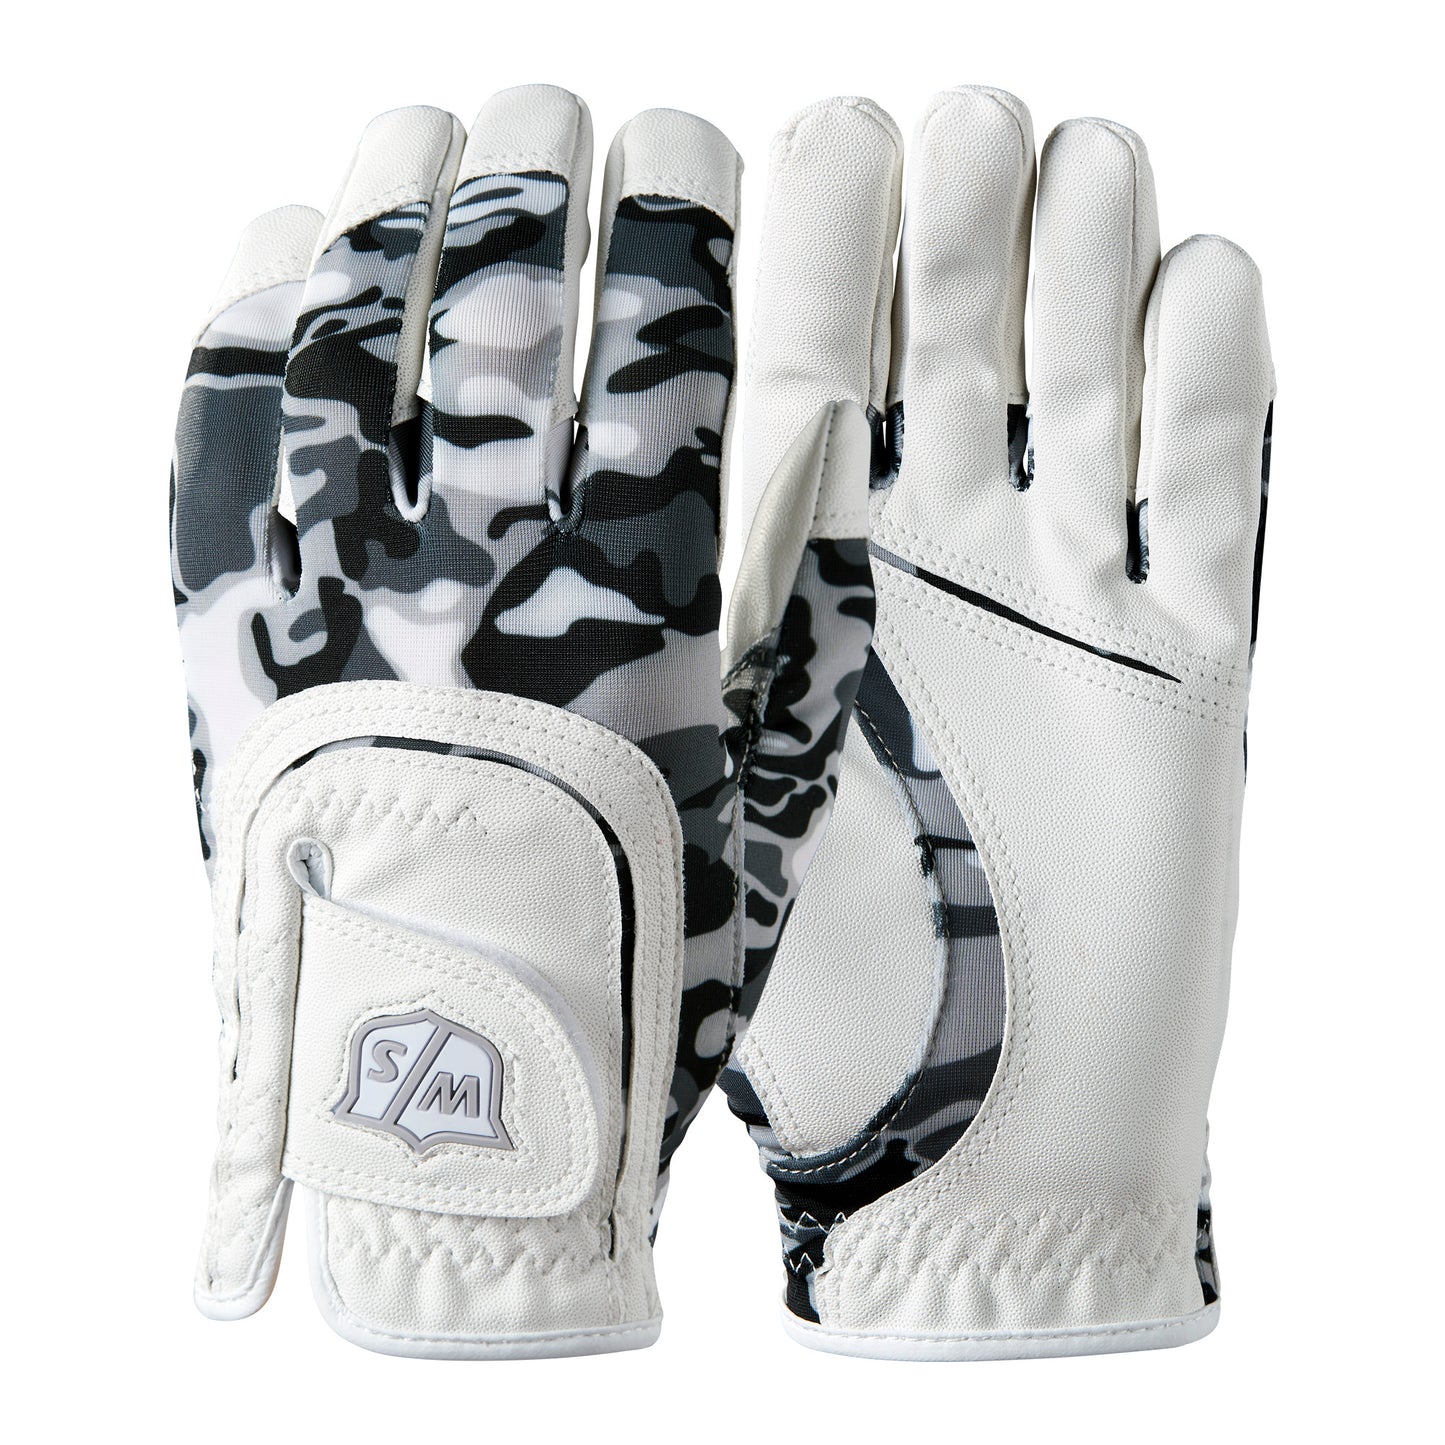 Wilson Staff Fit All Junior Golf Glove, White/Black/Grey Camo Print